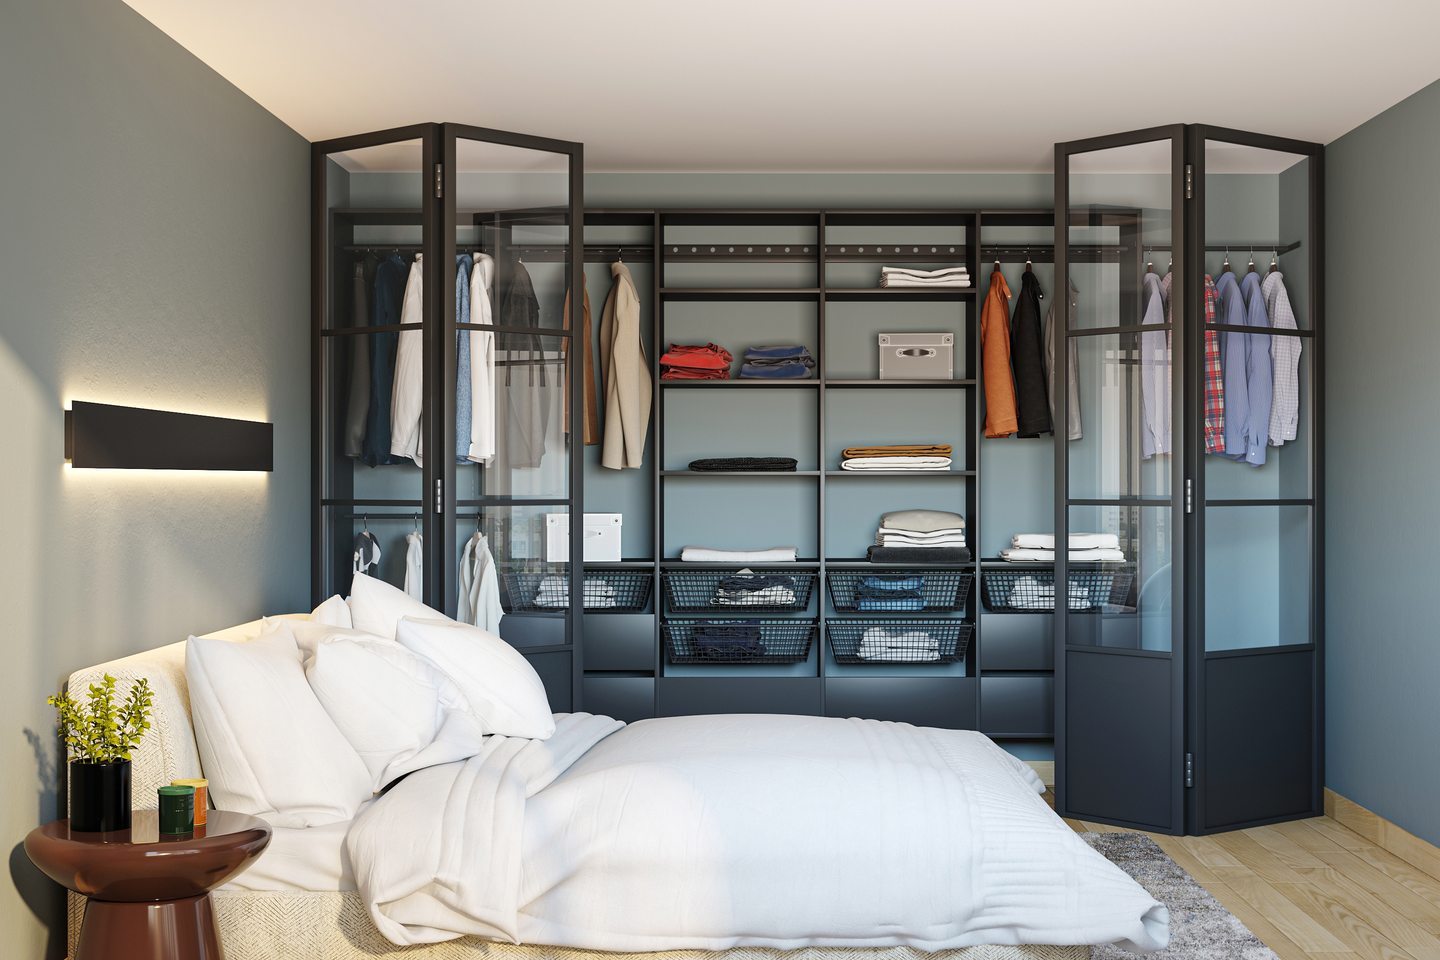 Modern Master Bedroom Interior Design with Glass Wardrobe - Livspace